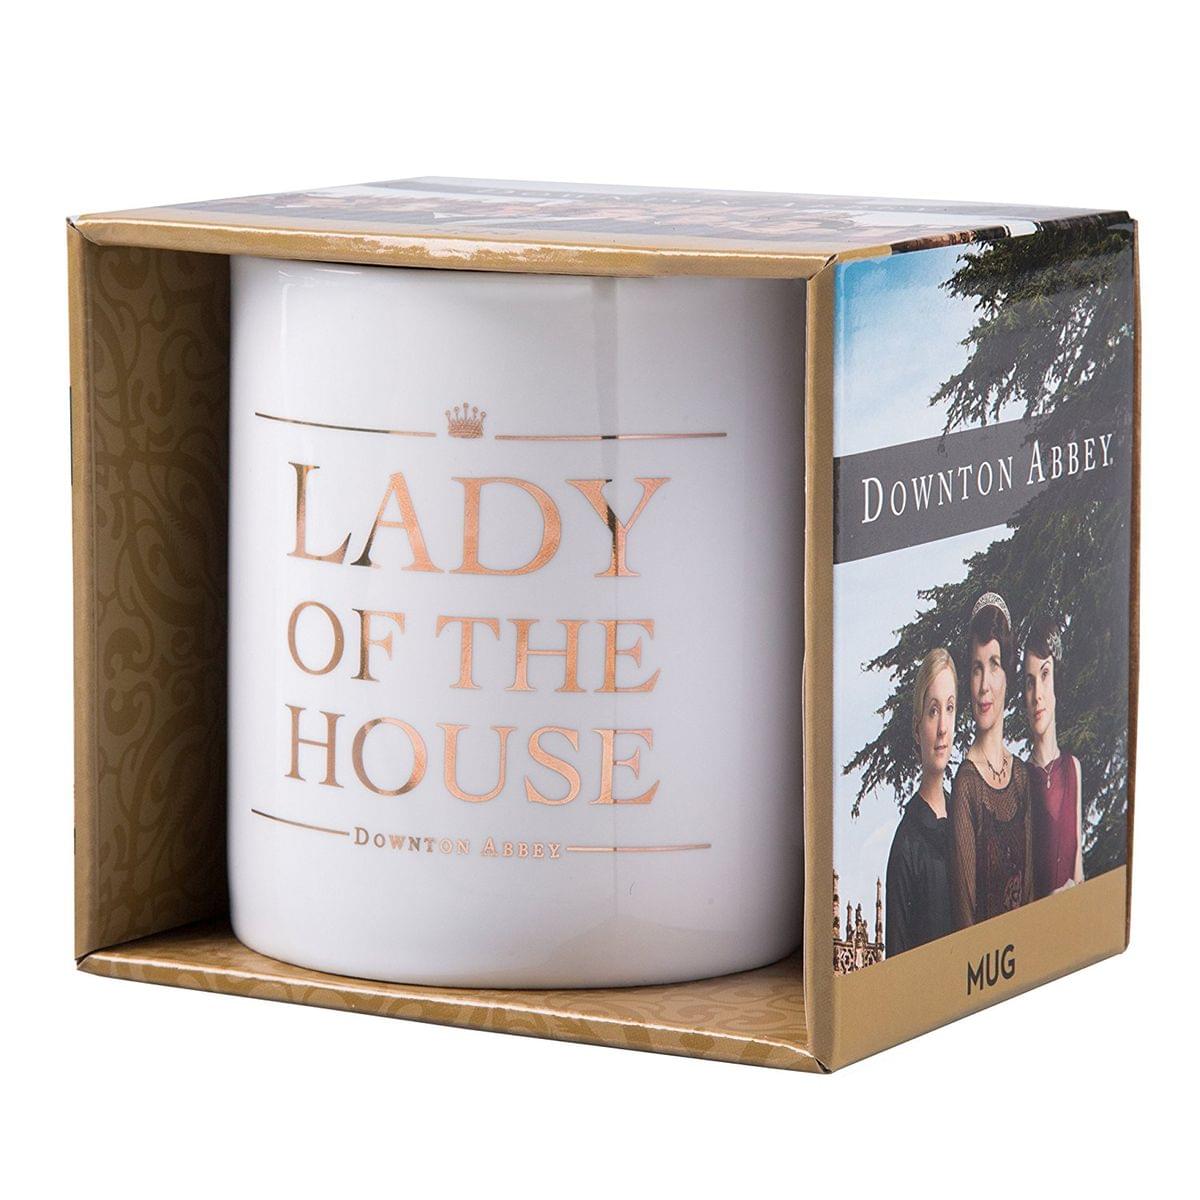 Downton Abbey "Lady of the House" 20oz Mug